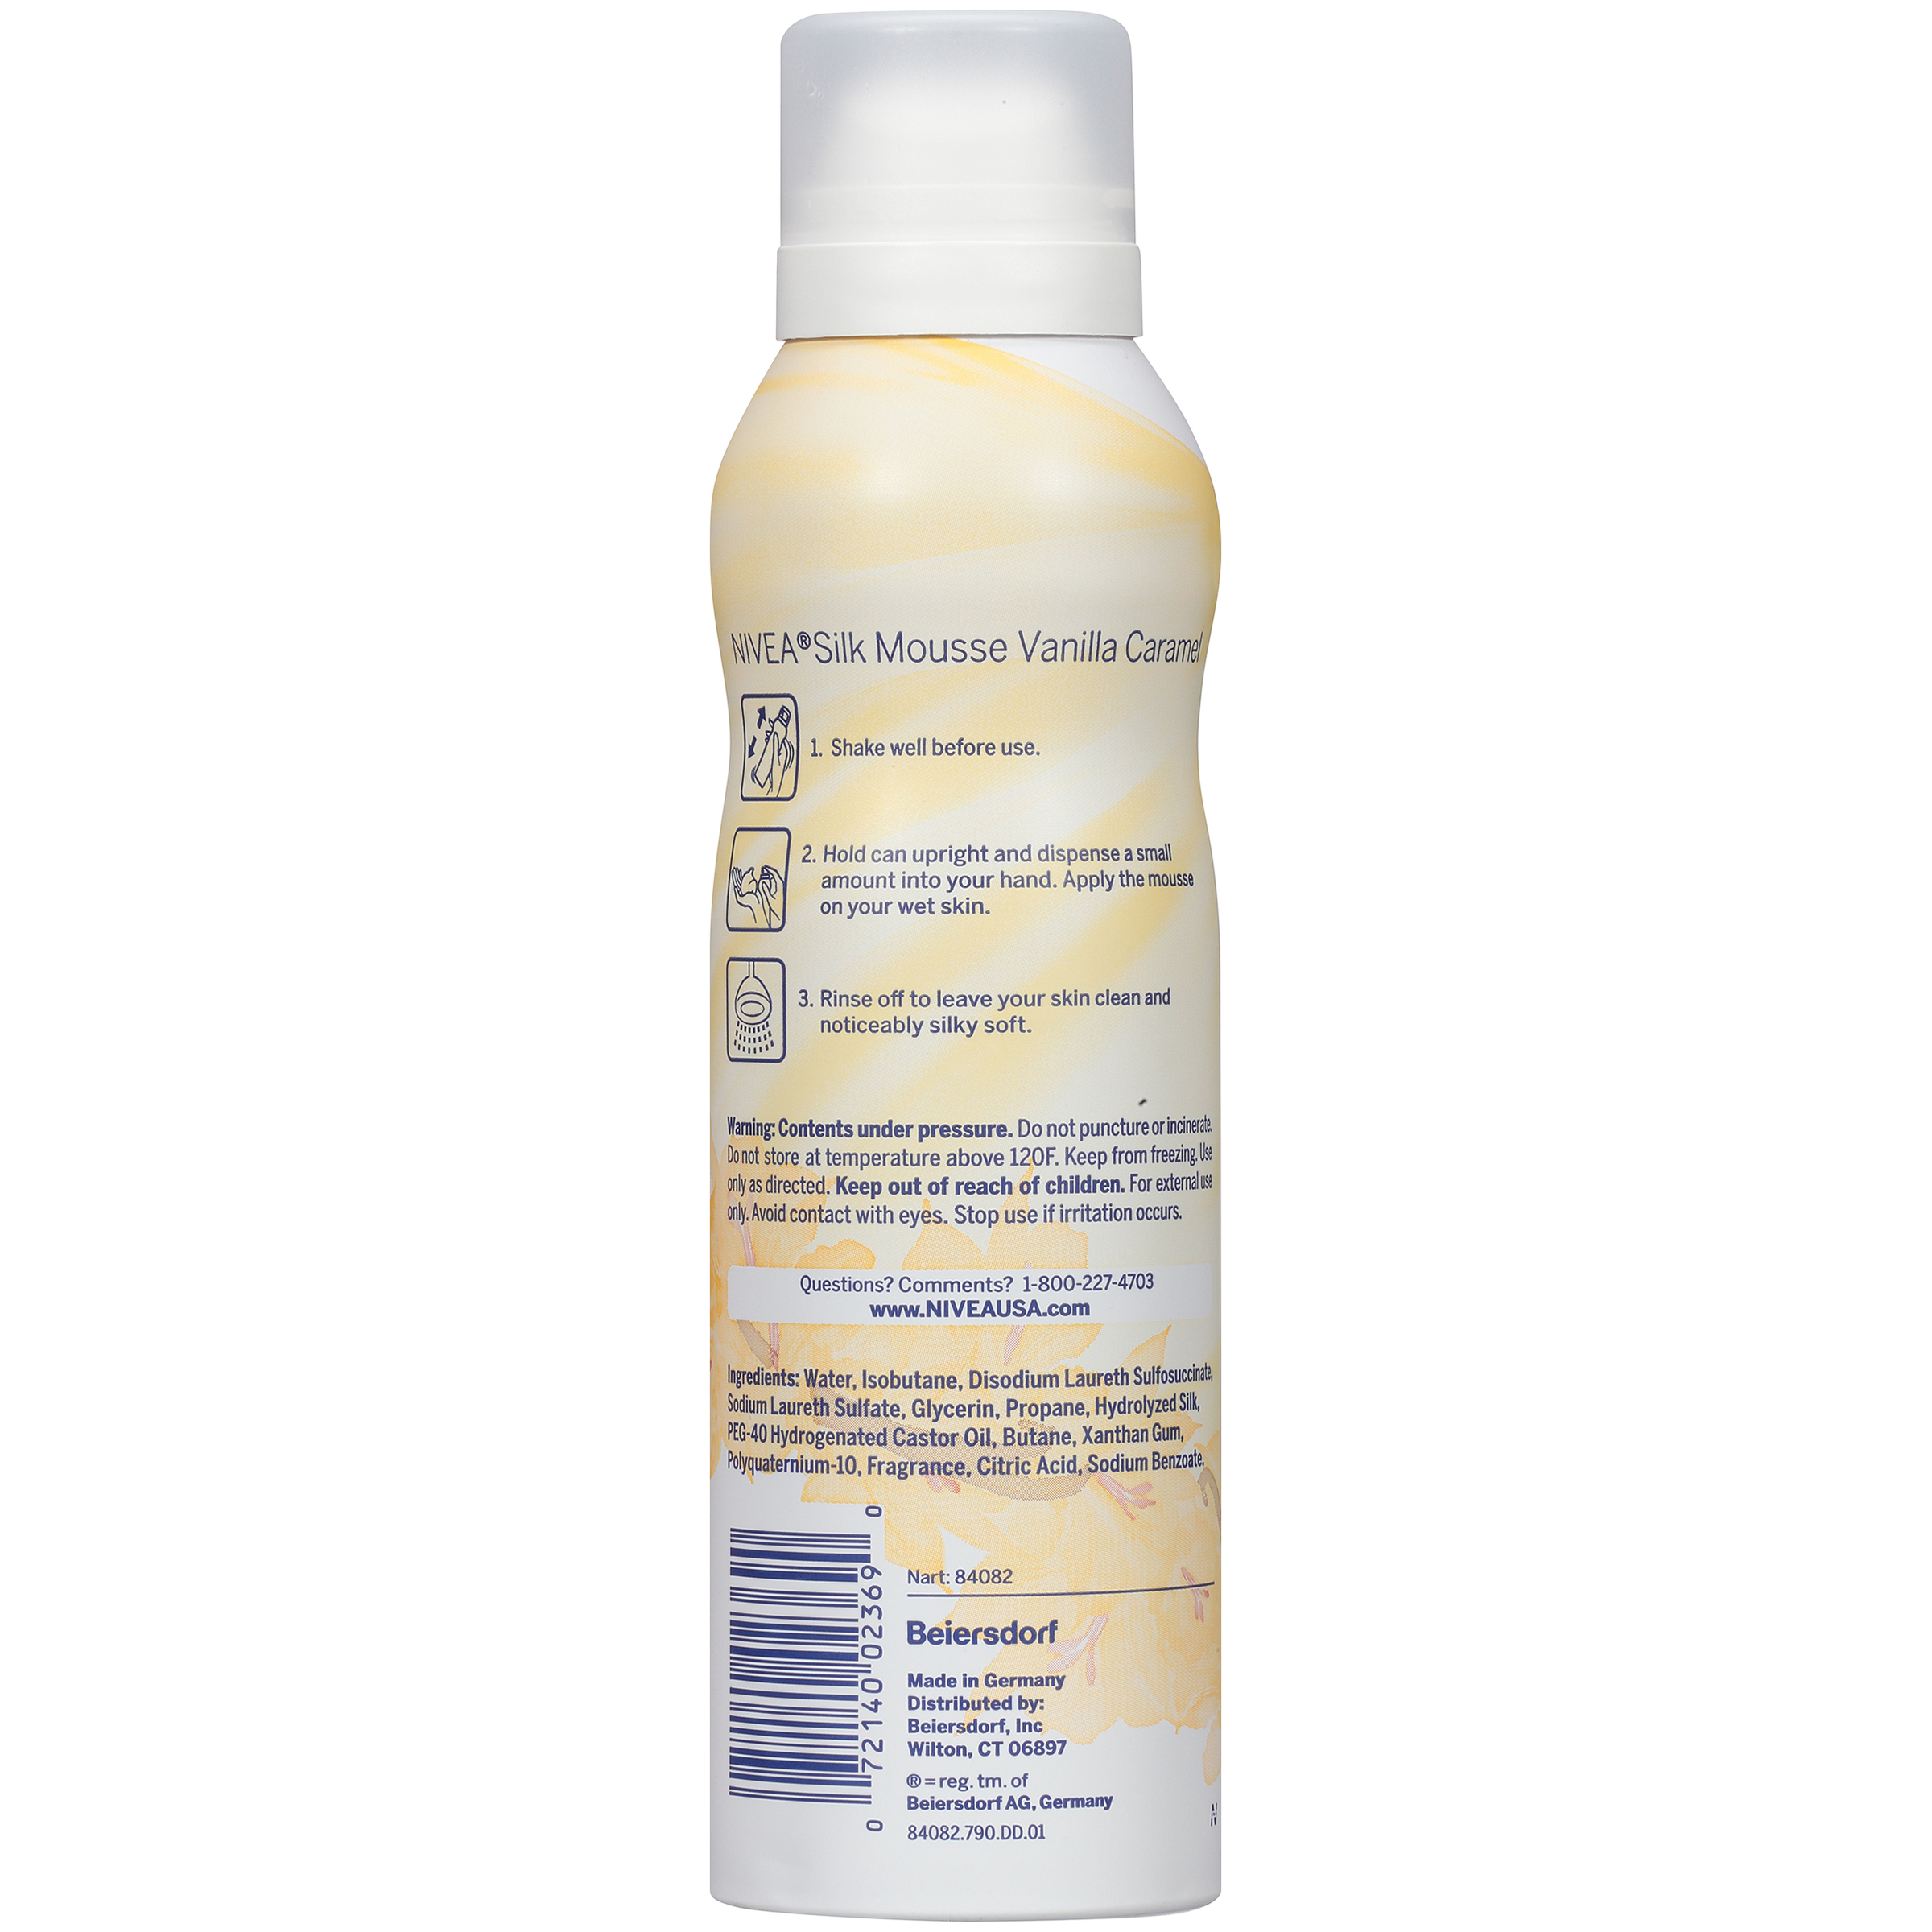 NIVEA Vanilla Caramel Foaming Silk Mousse Body Wash, 6.8 oz. Pump Bottle - image 4 of 4